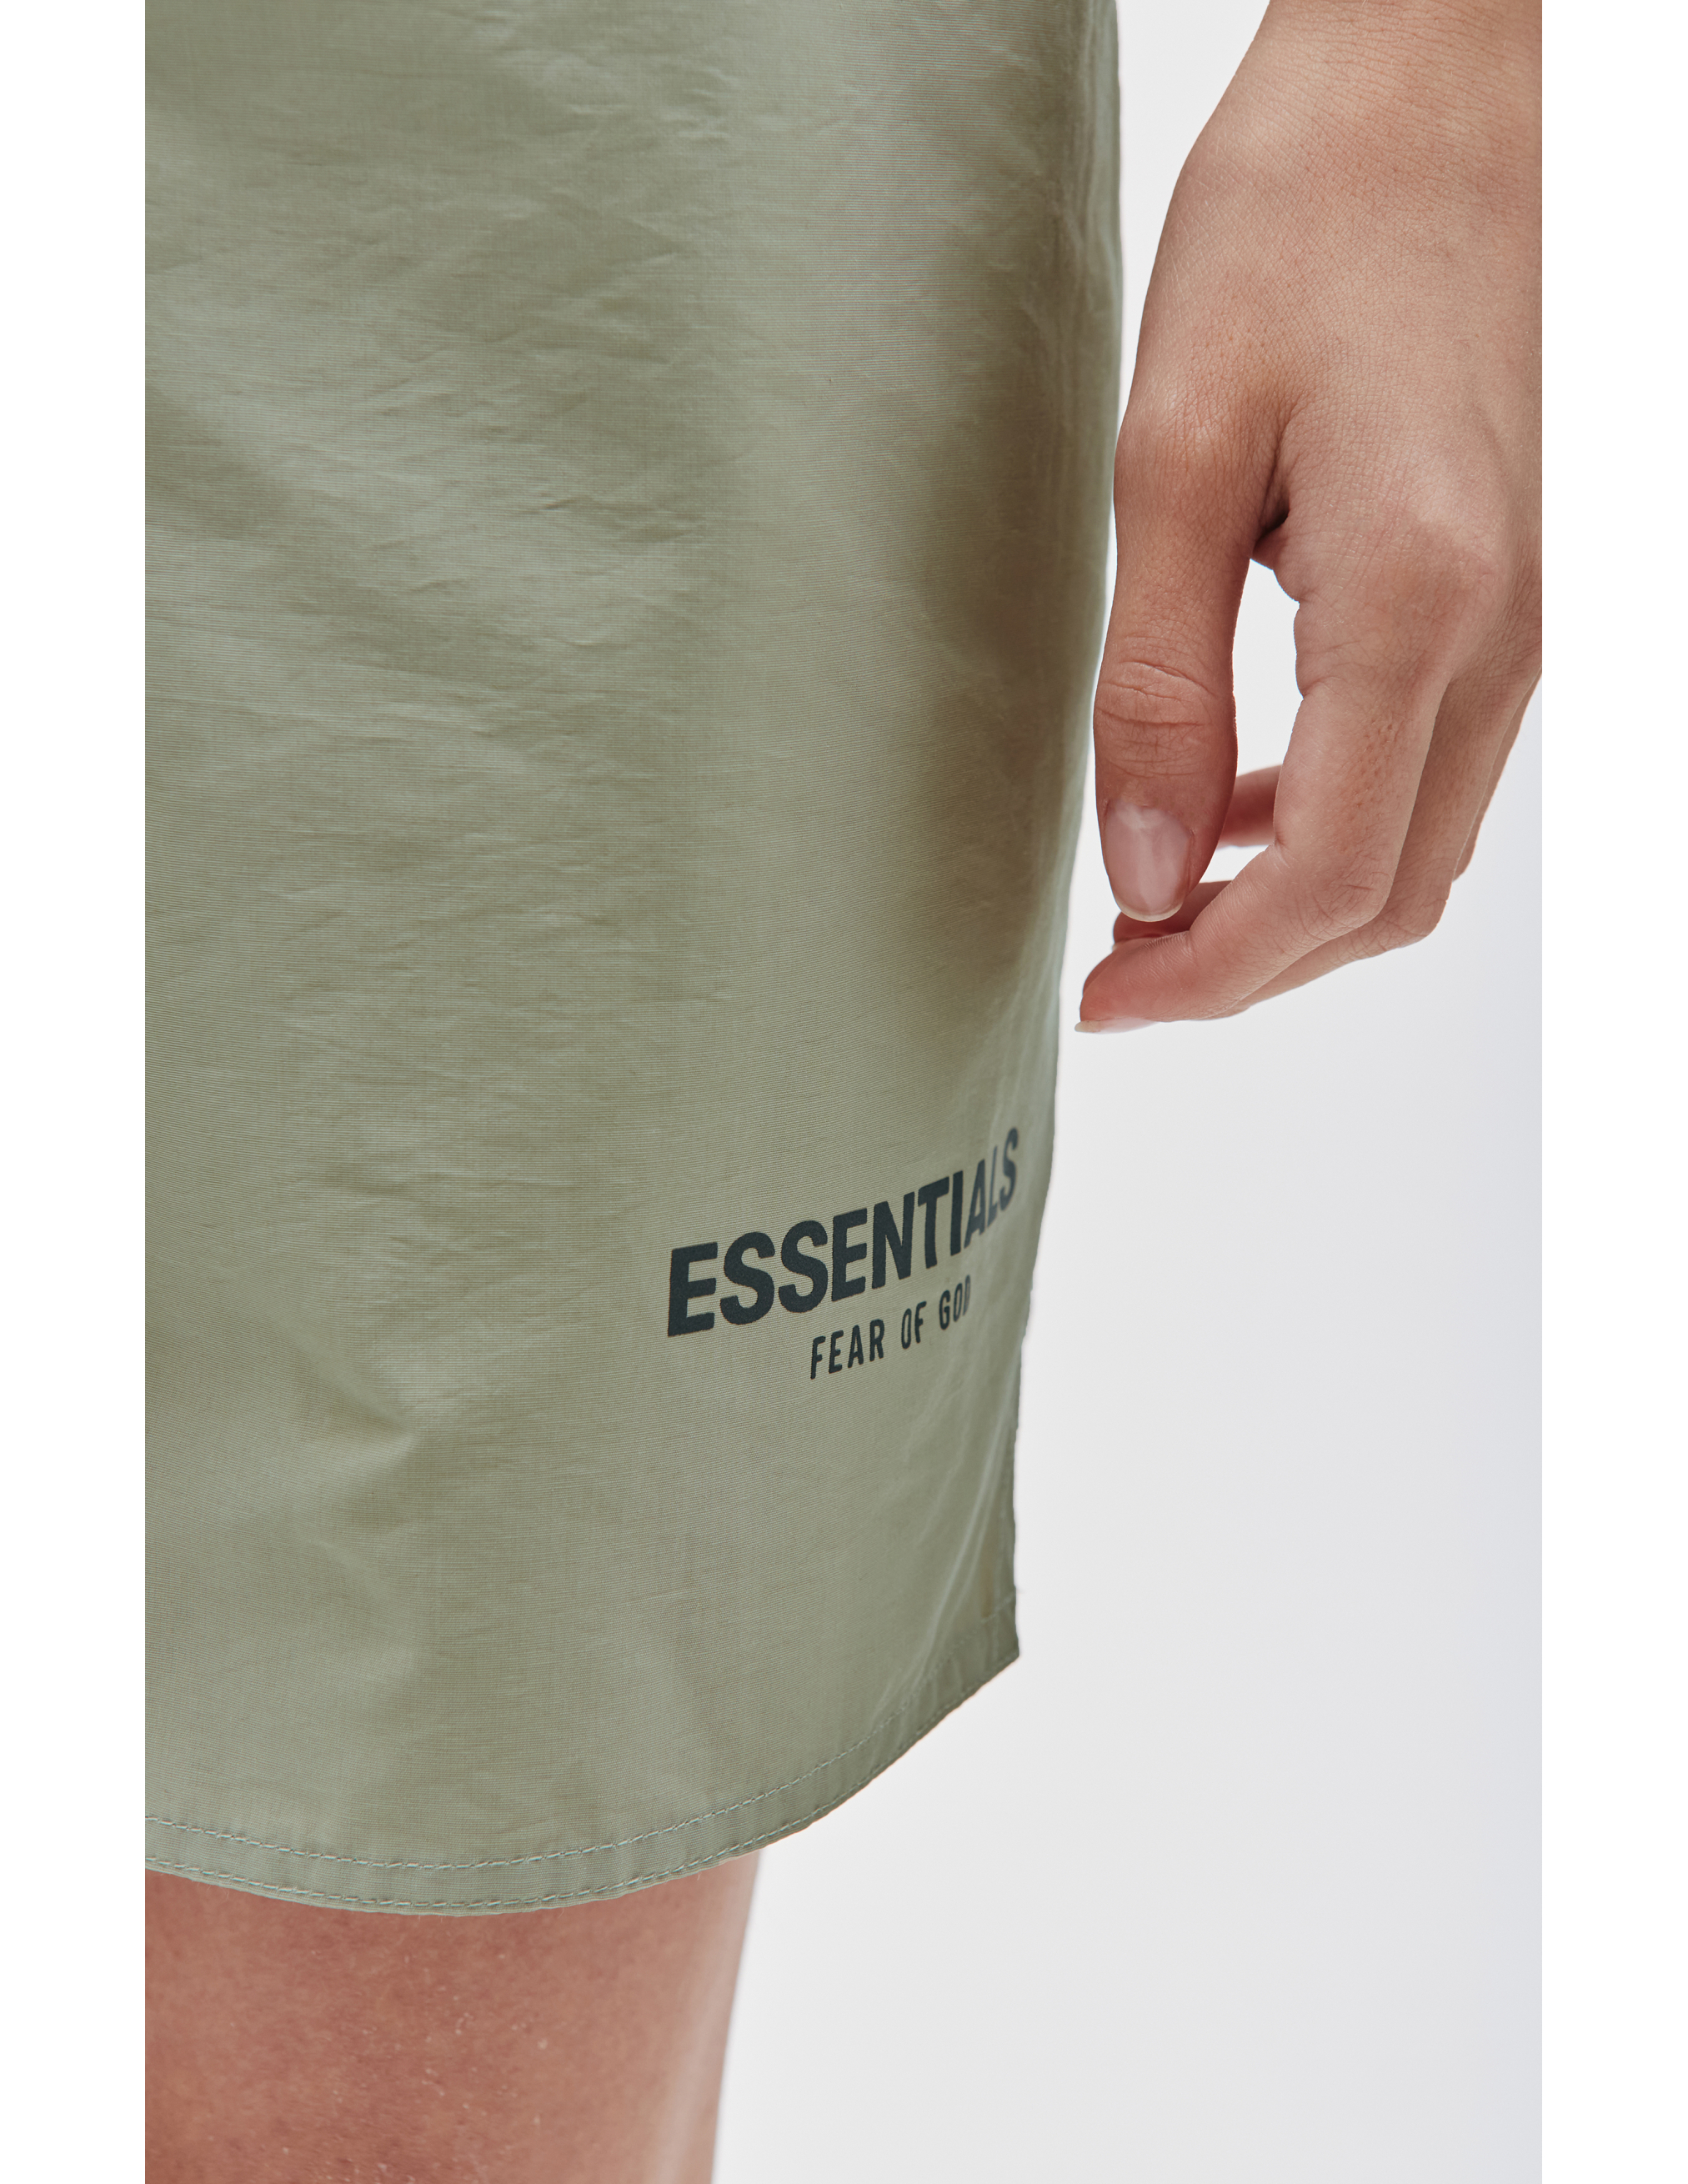 Нейлоновые шорты с логотипом Fear of God Essentials 160SU212010F, размер XXL;XL;L;M - фото 5